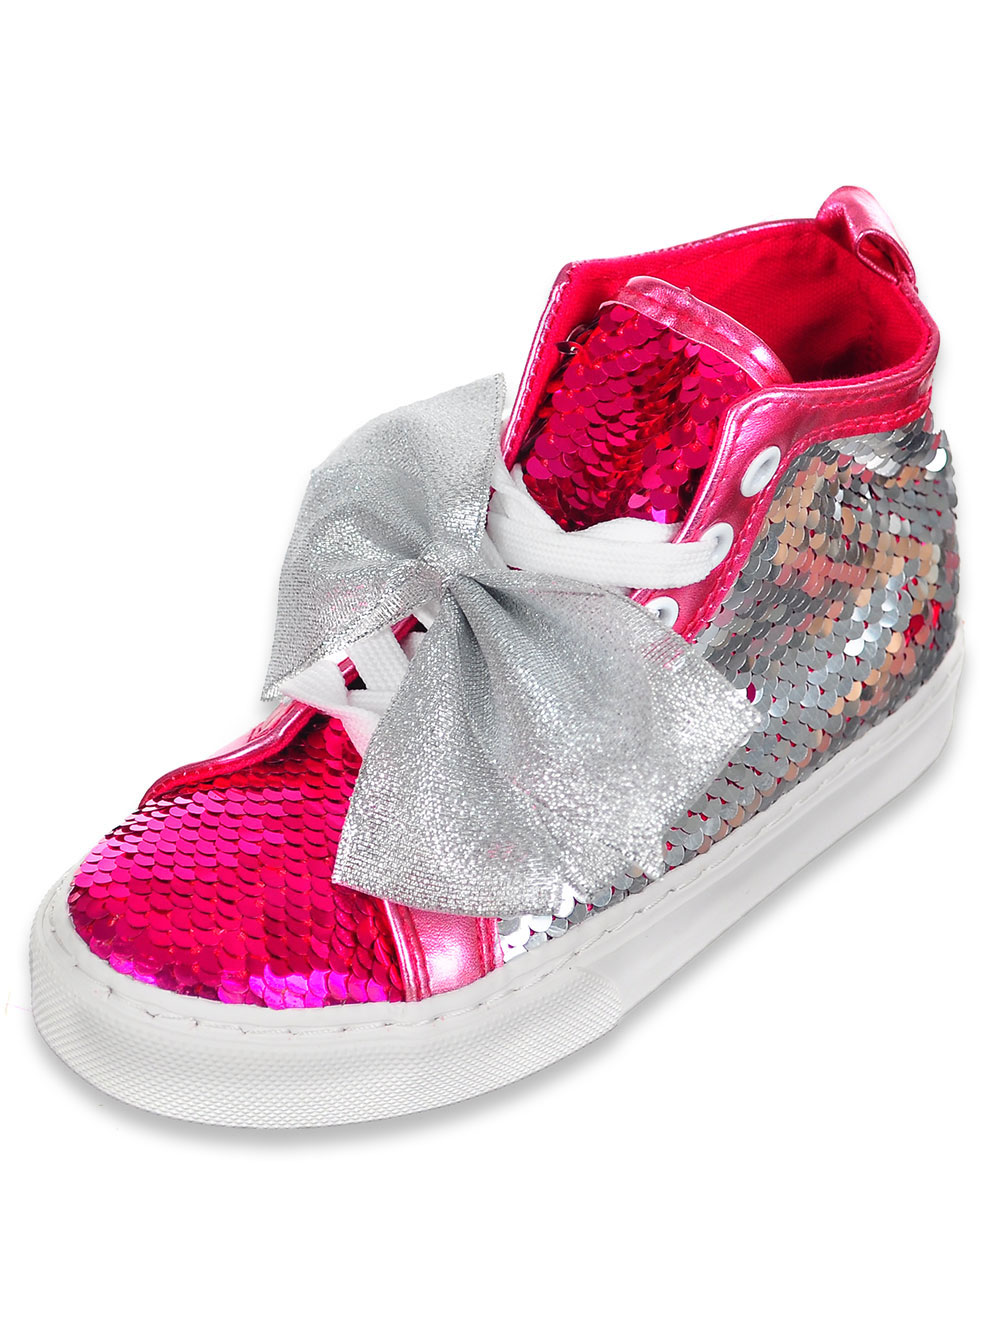 Girls Pink Sneakers